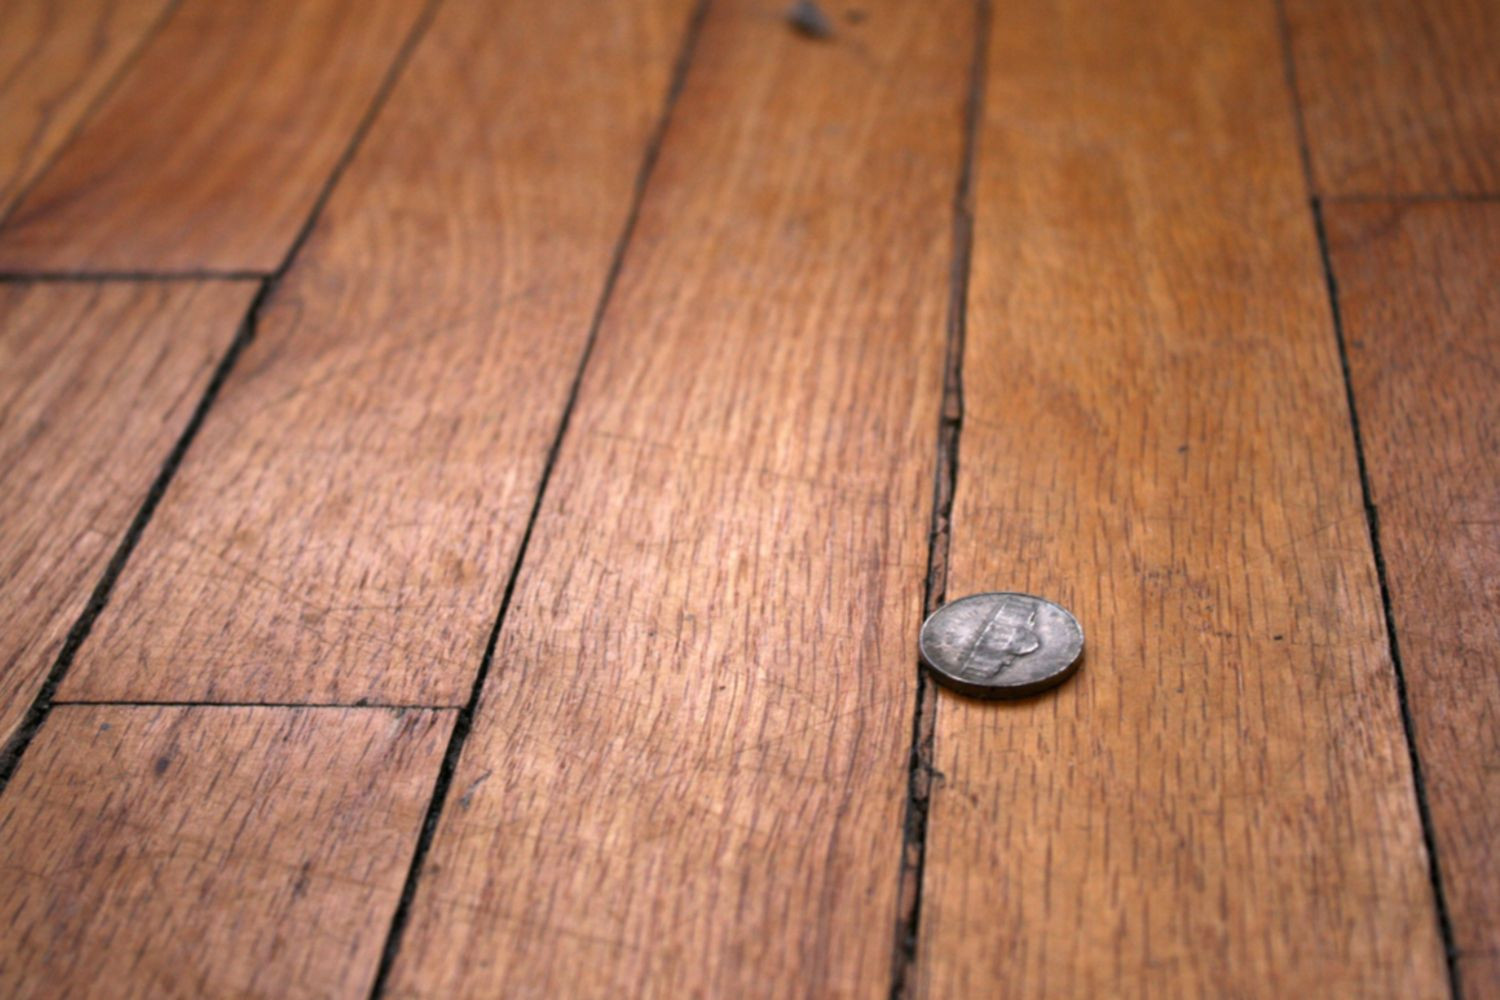 filling gaps in hardwood floors with rope of how to repair gaps between floorboards with regard to wood floor with gaps between boards 1500 x 1000 56a49eb25f9b58b7d0d7df8d